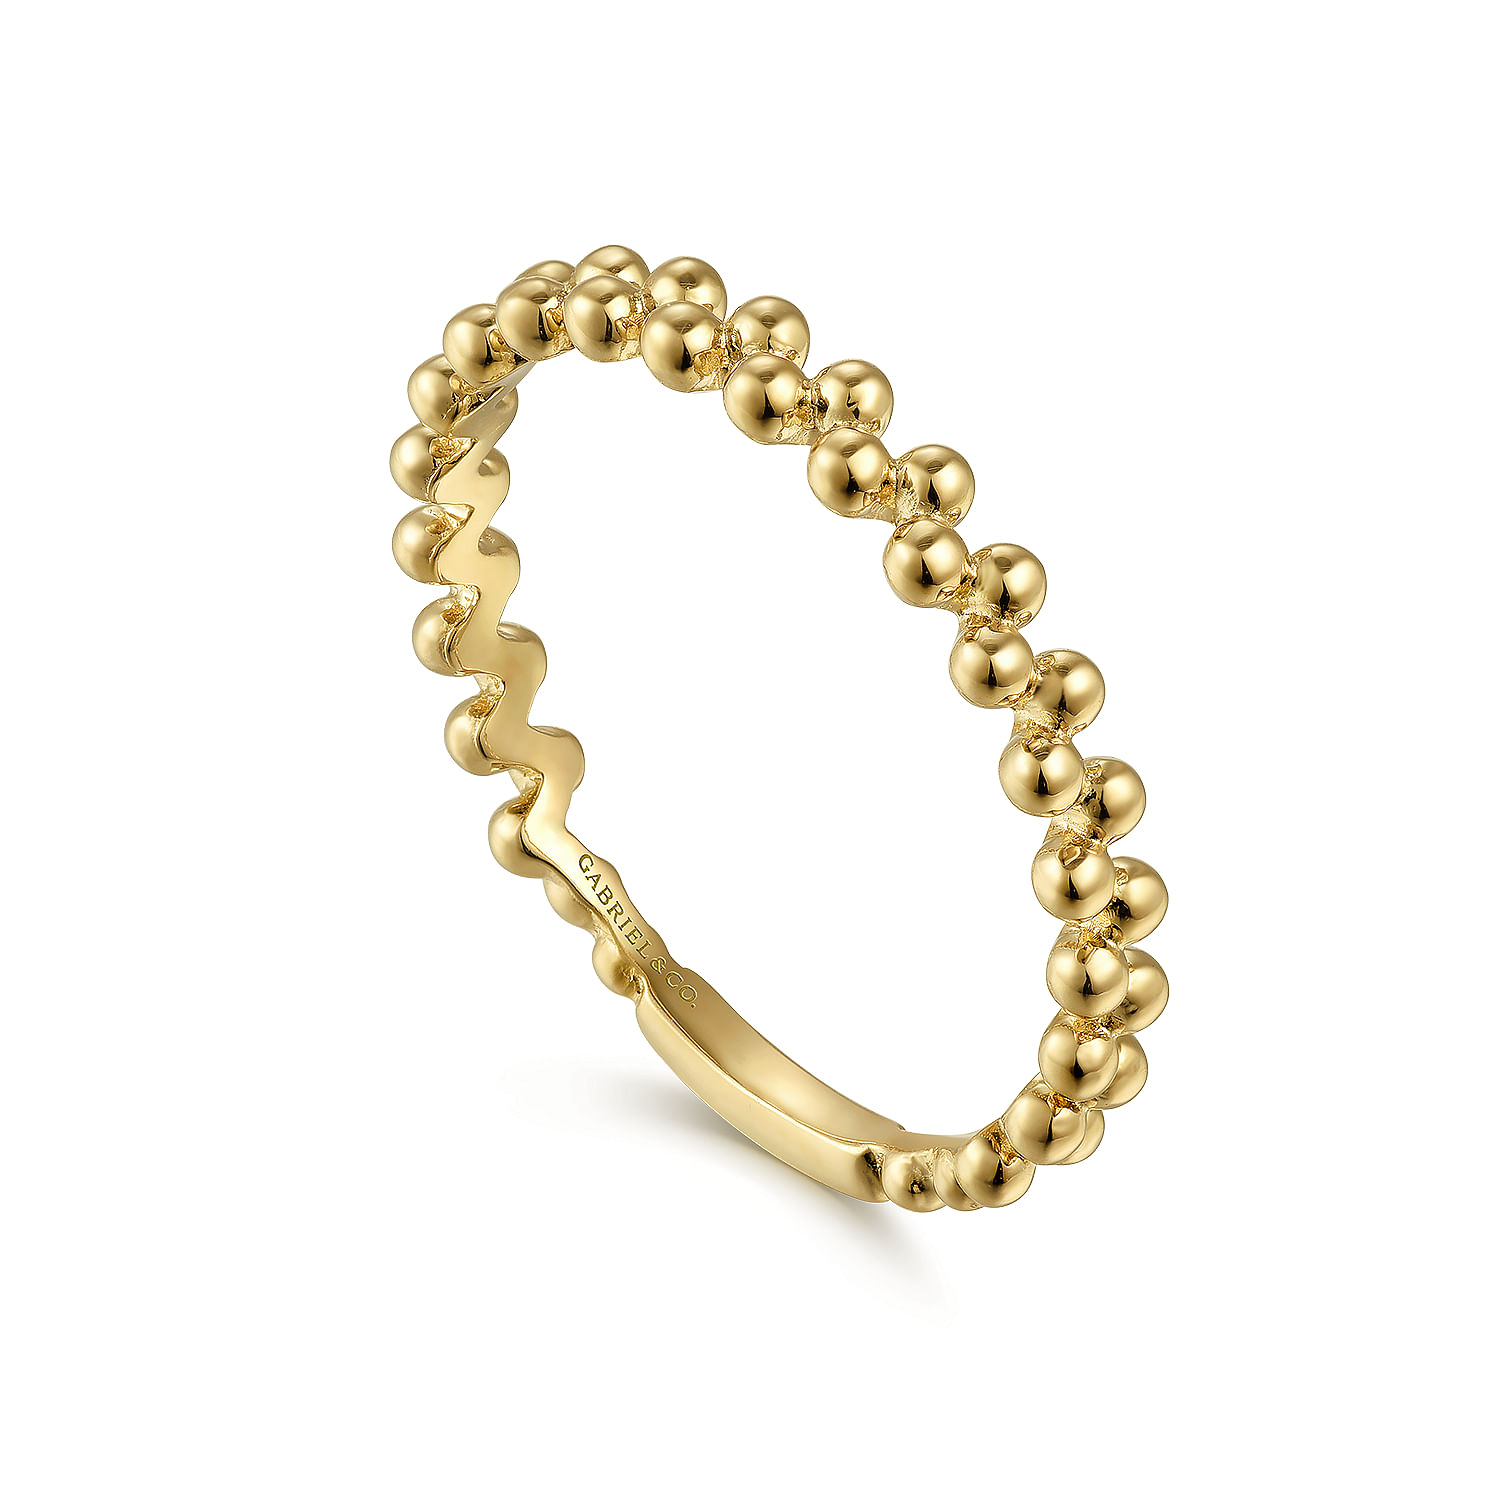 14K Yellow Gold Double Row Bujukan Beads Stackable Ring